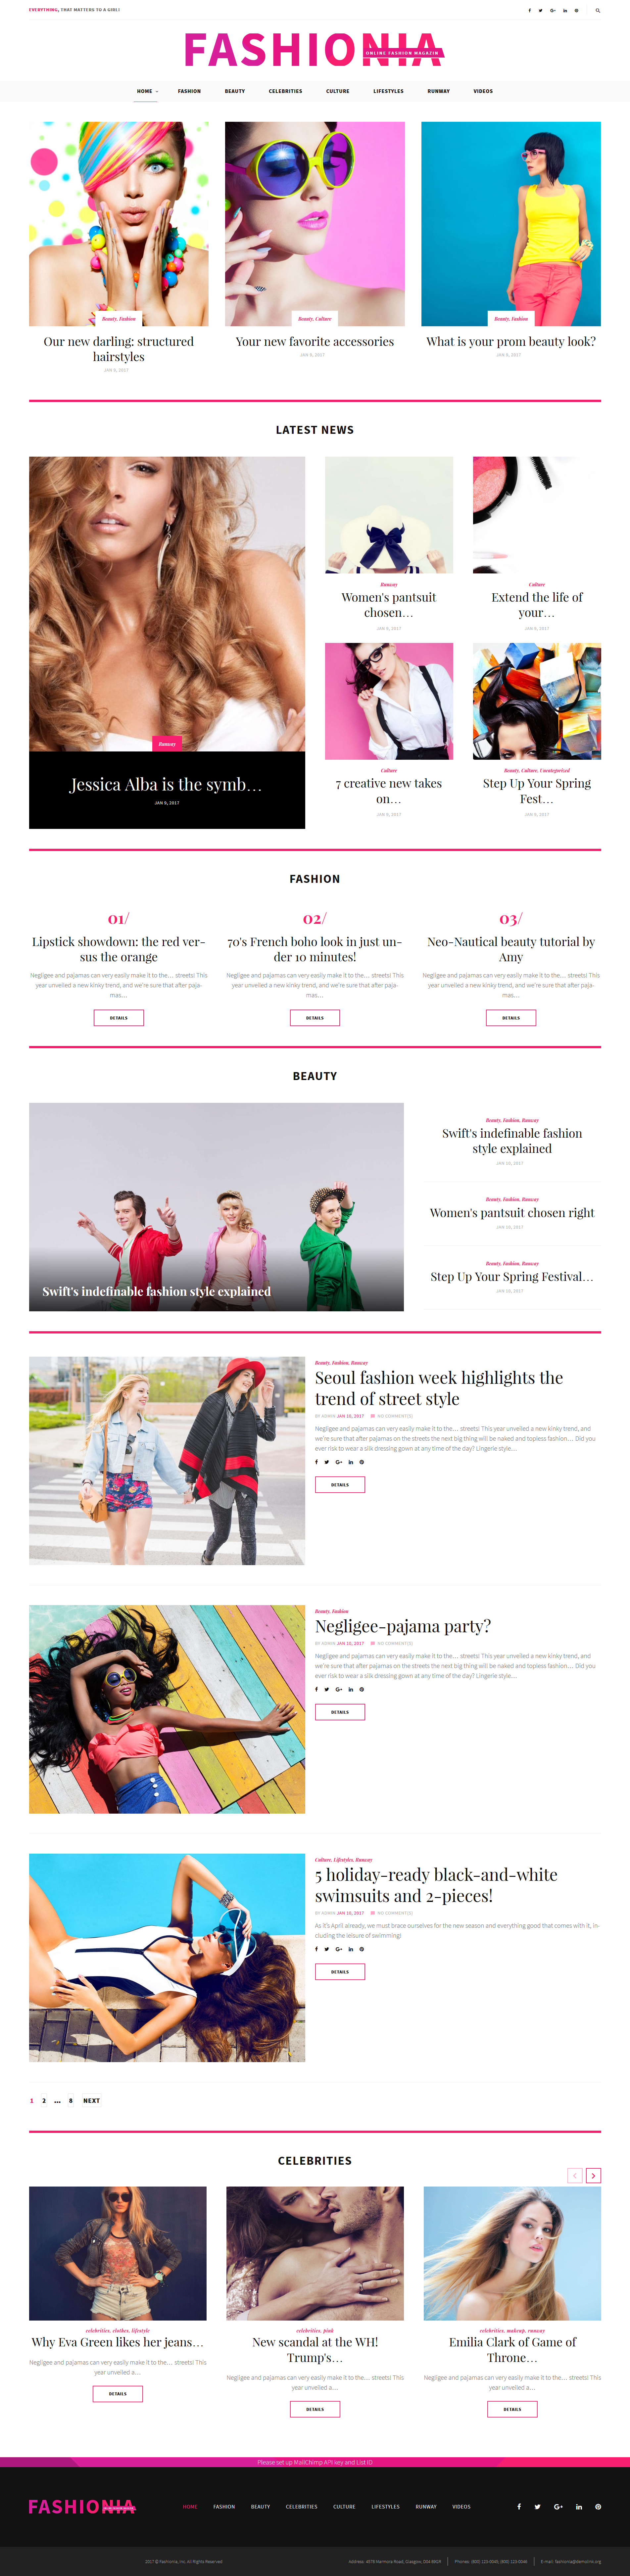 Fashionia - Online Fashion Magazine Responsive WordPress Theme